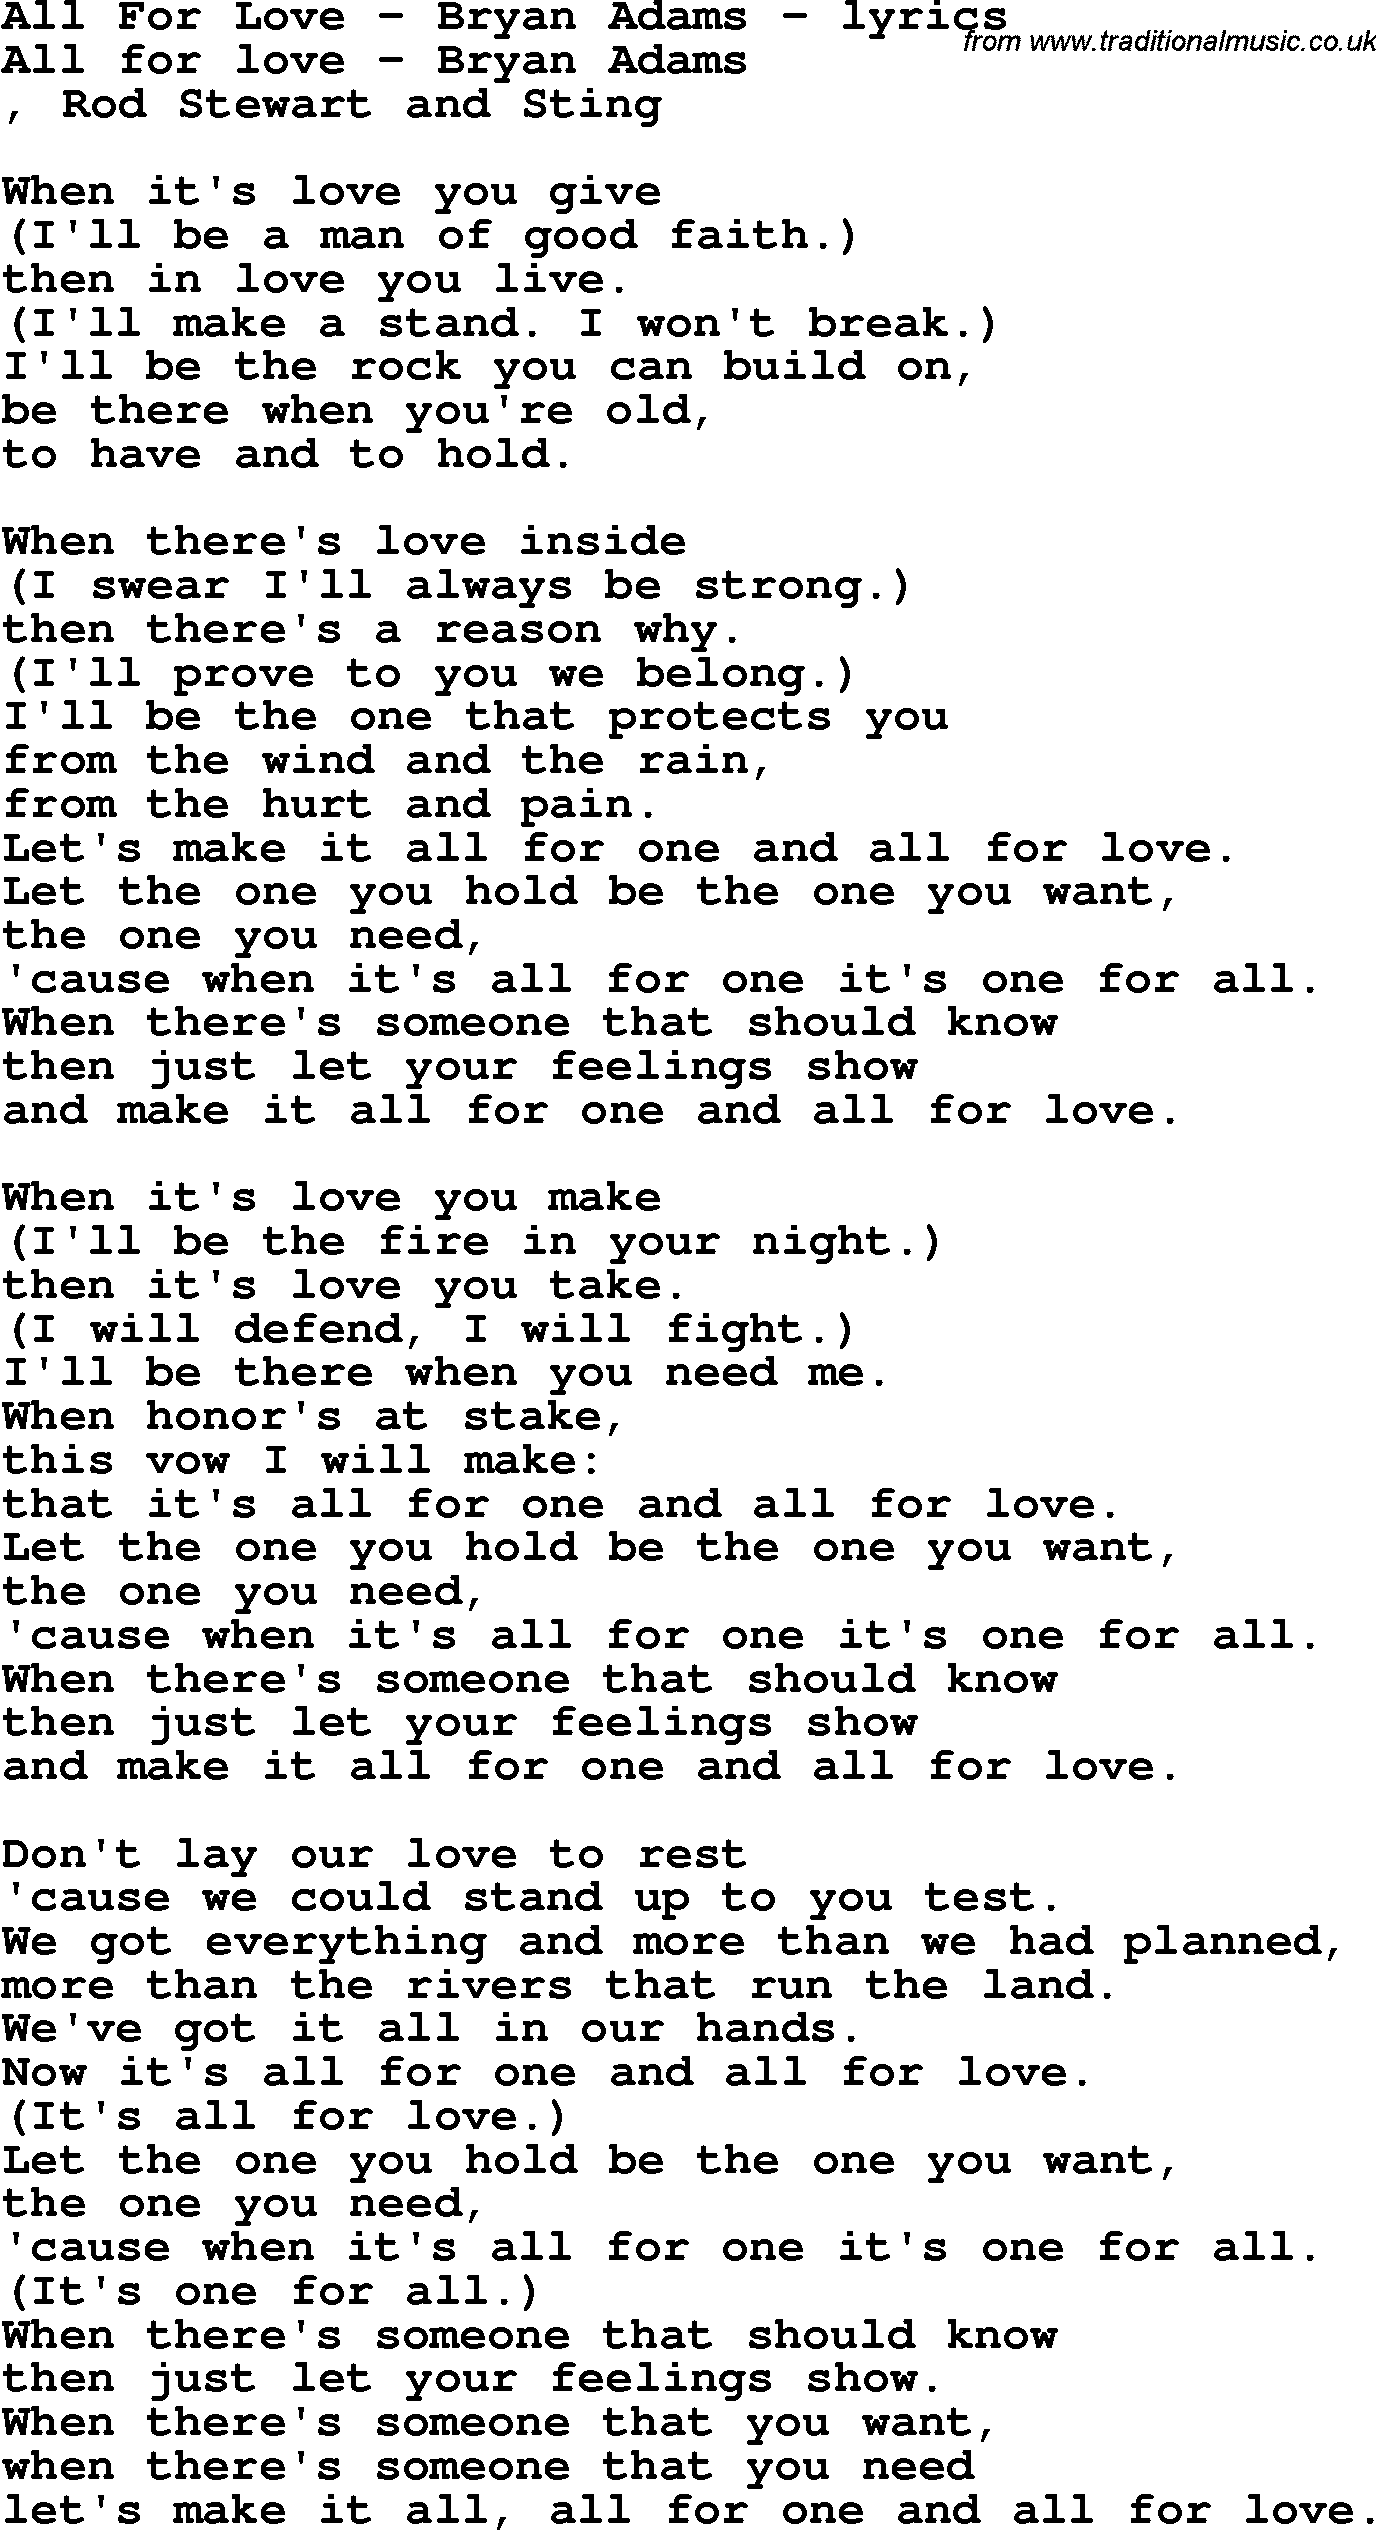 Love Song Lyrics for: All For Love - Bryan Adams